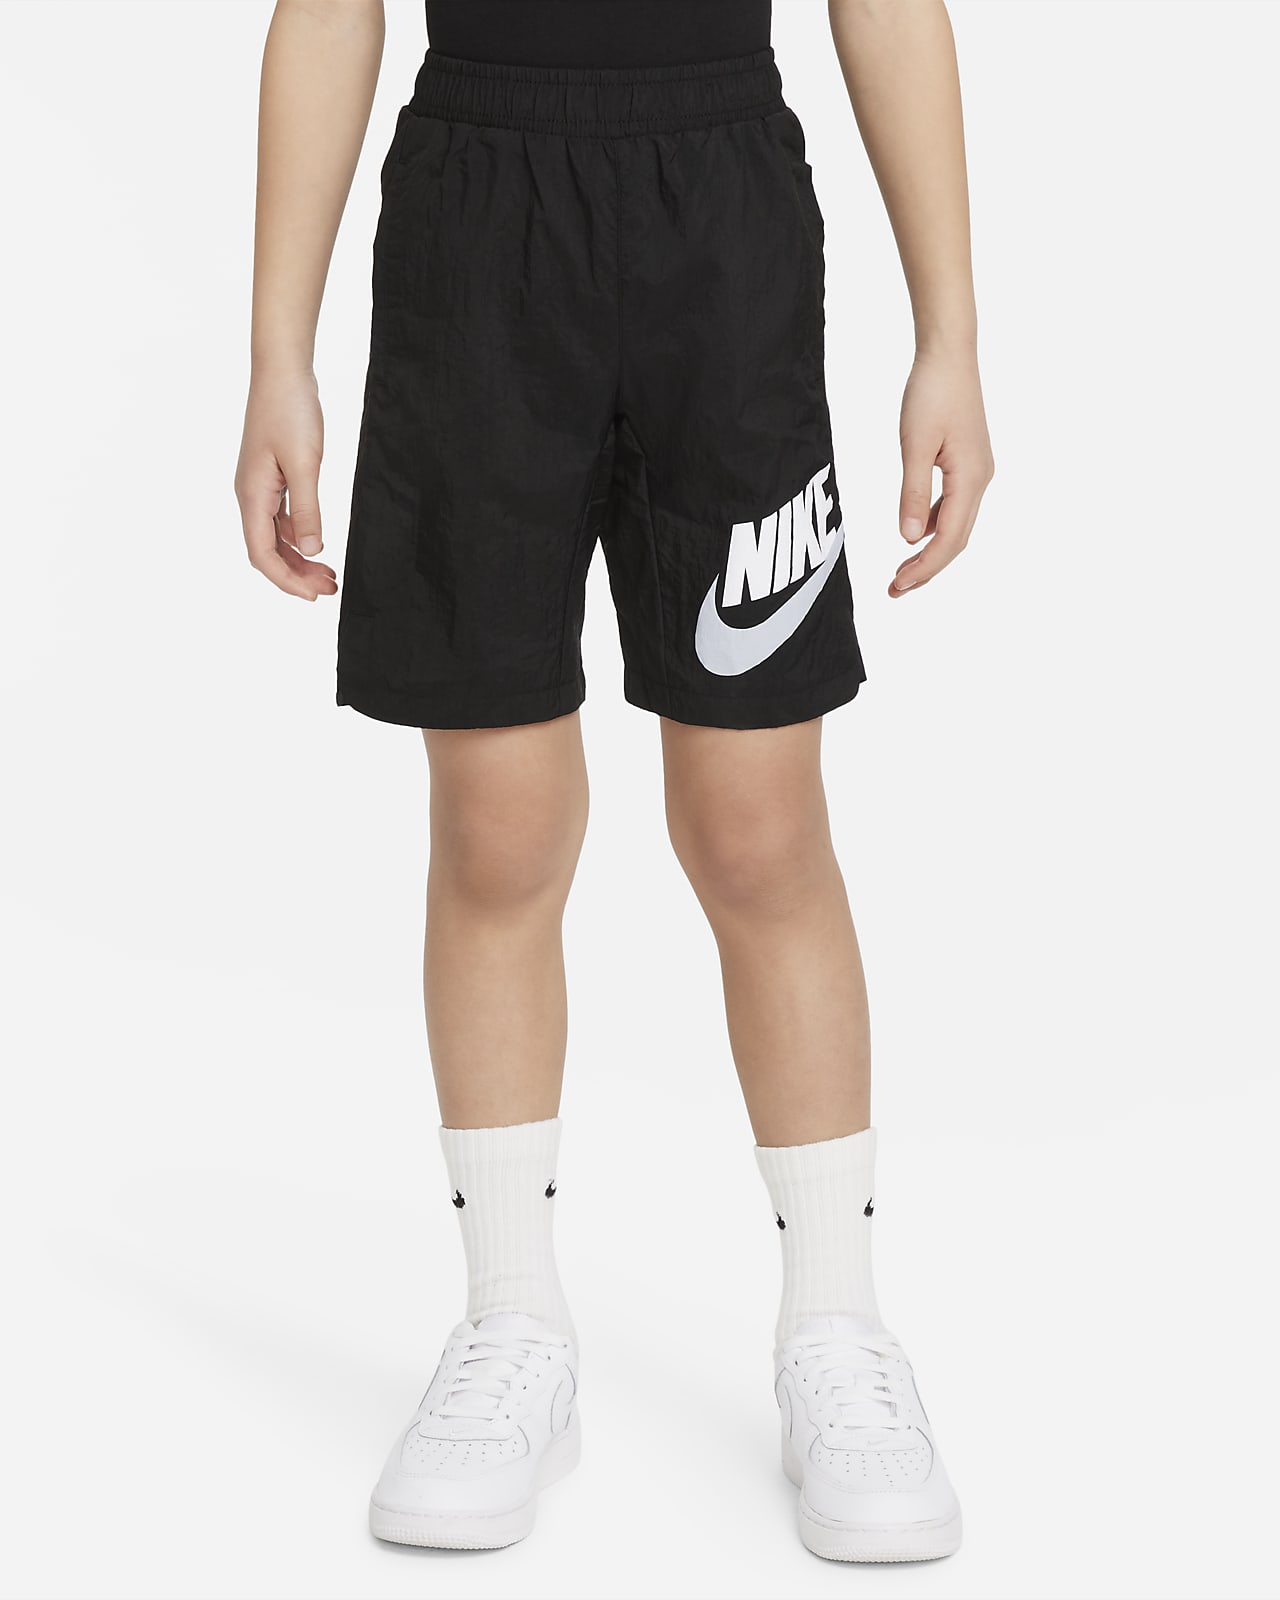 Nike Younger Kids' Shorts